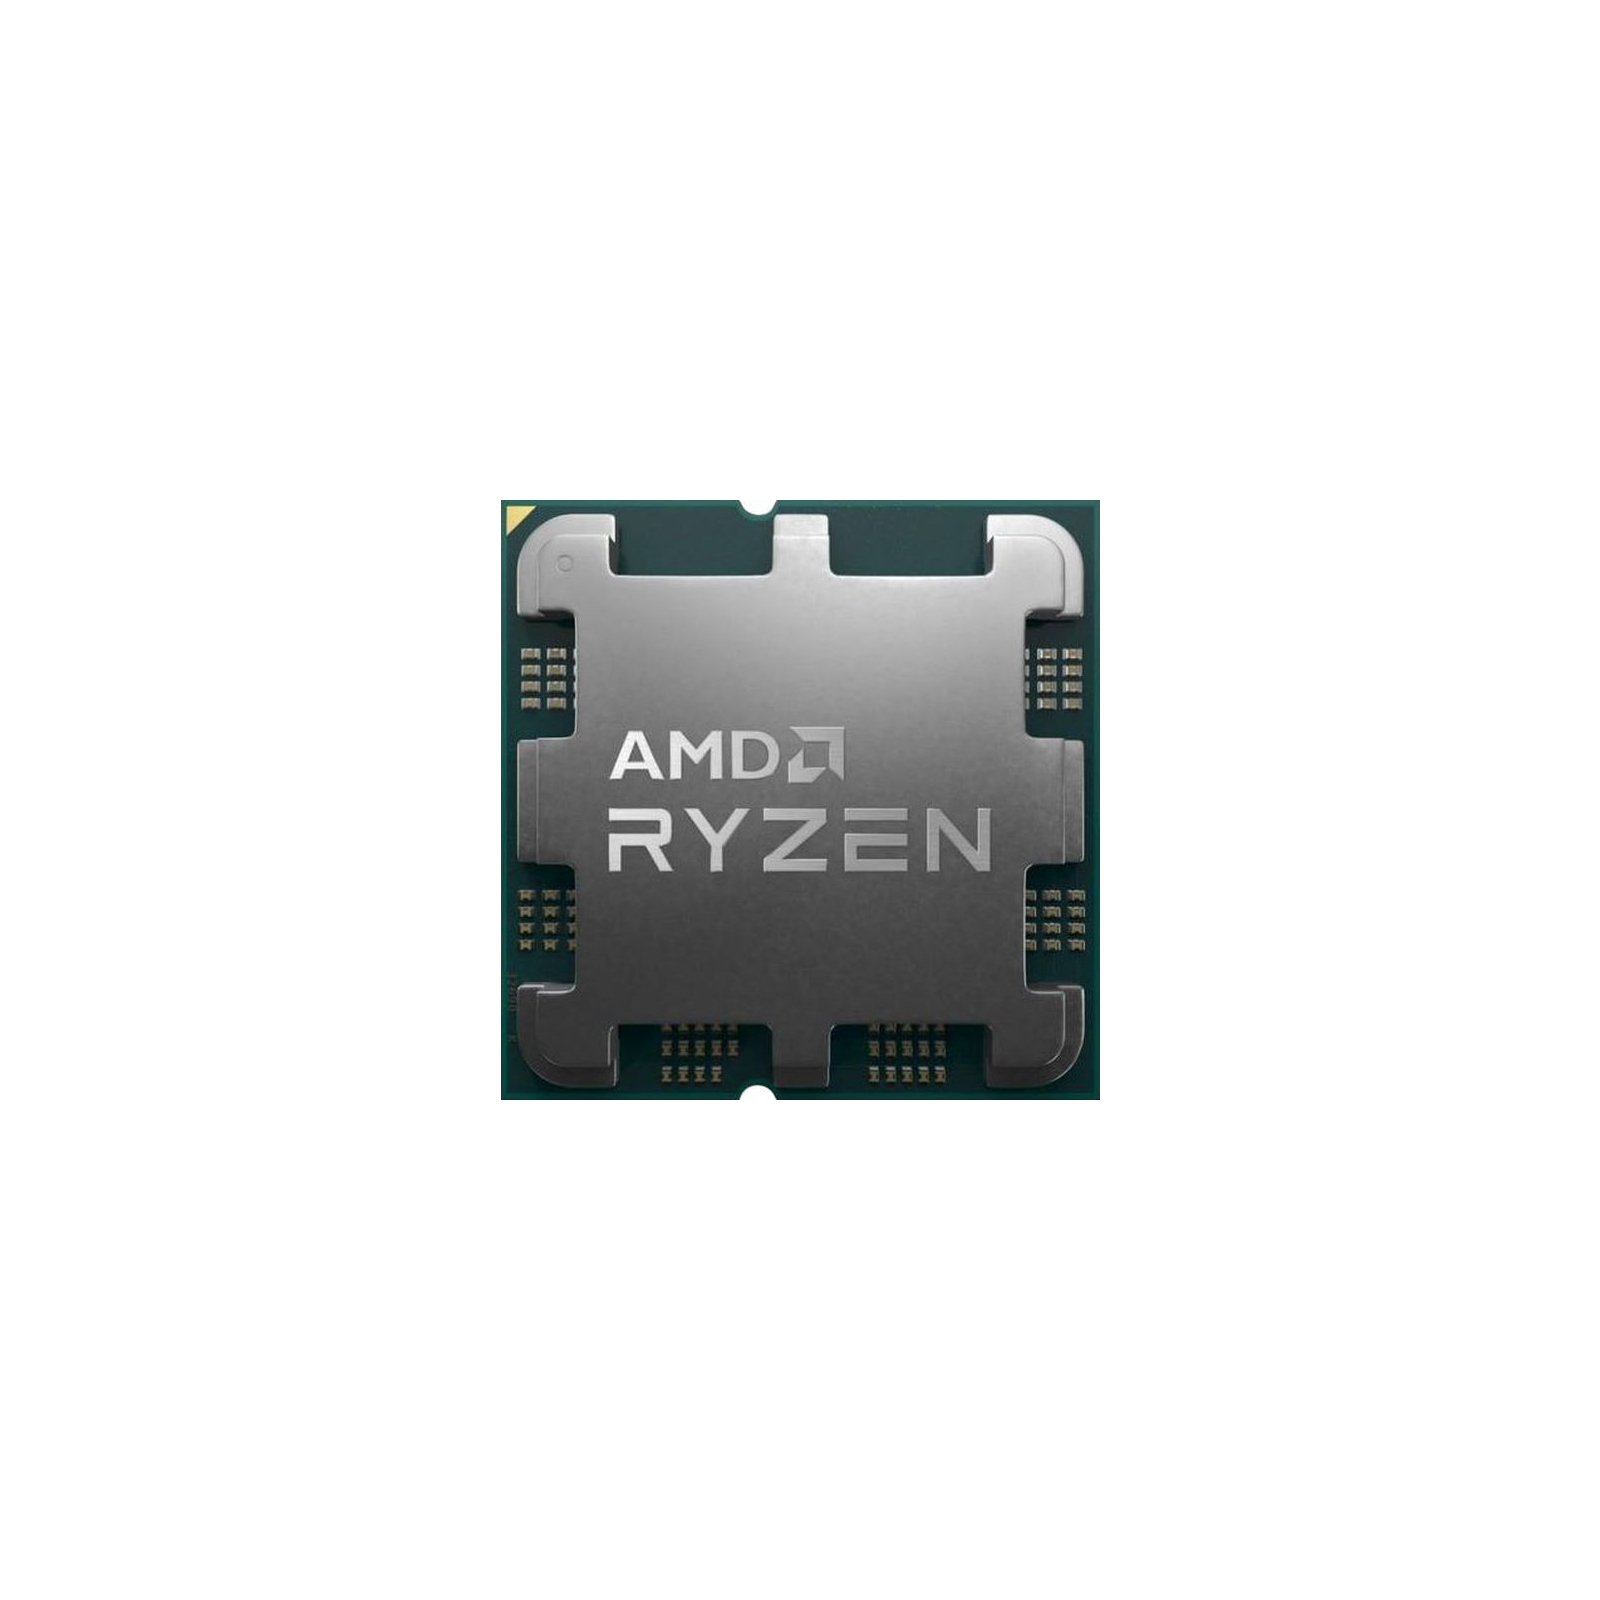 Процессор AMD Ryzen 7 7800X3D (100-000000910)